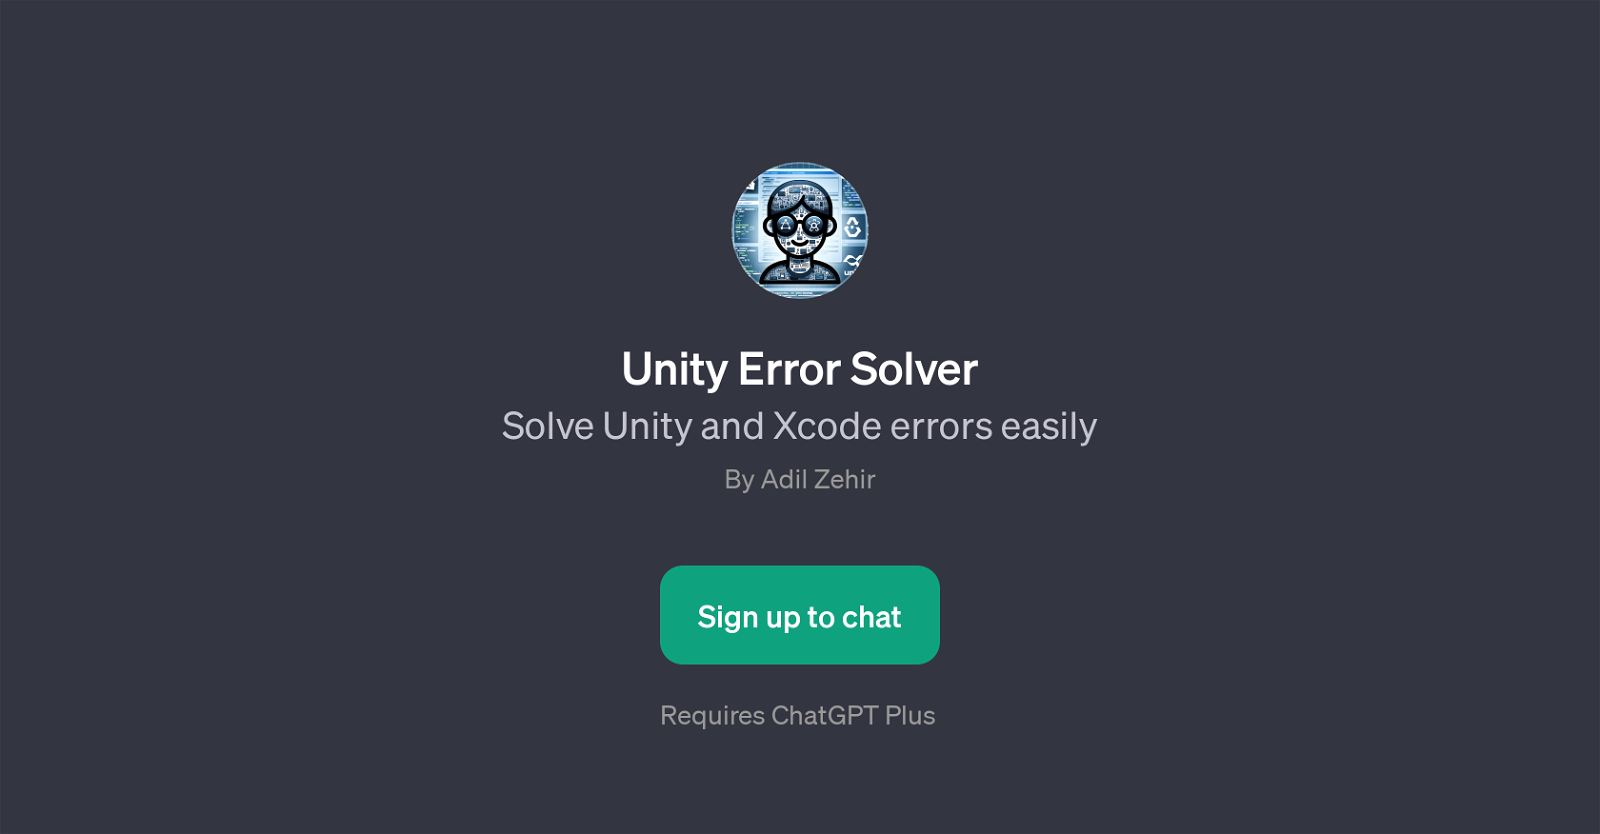 Unity Error Solver website